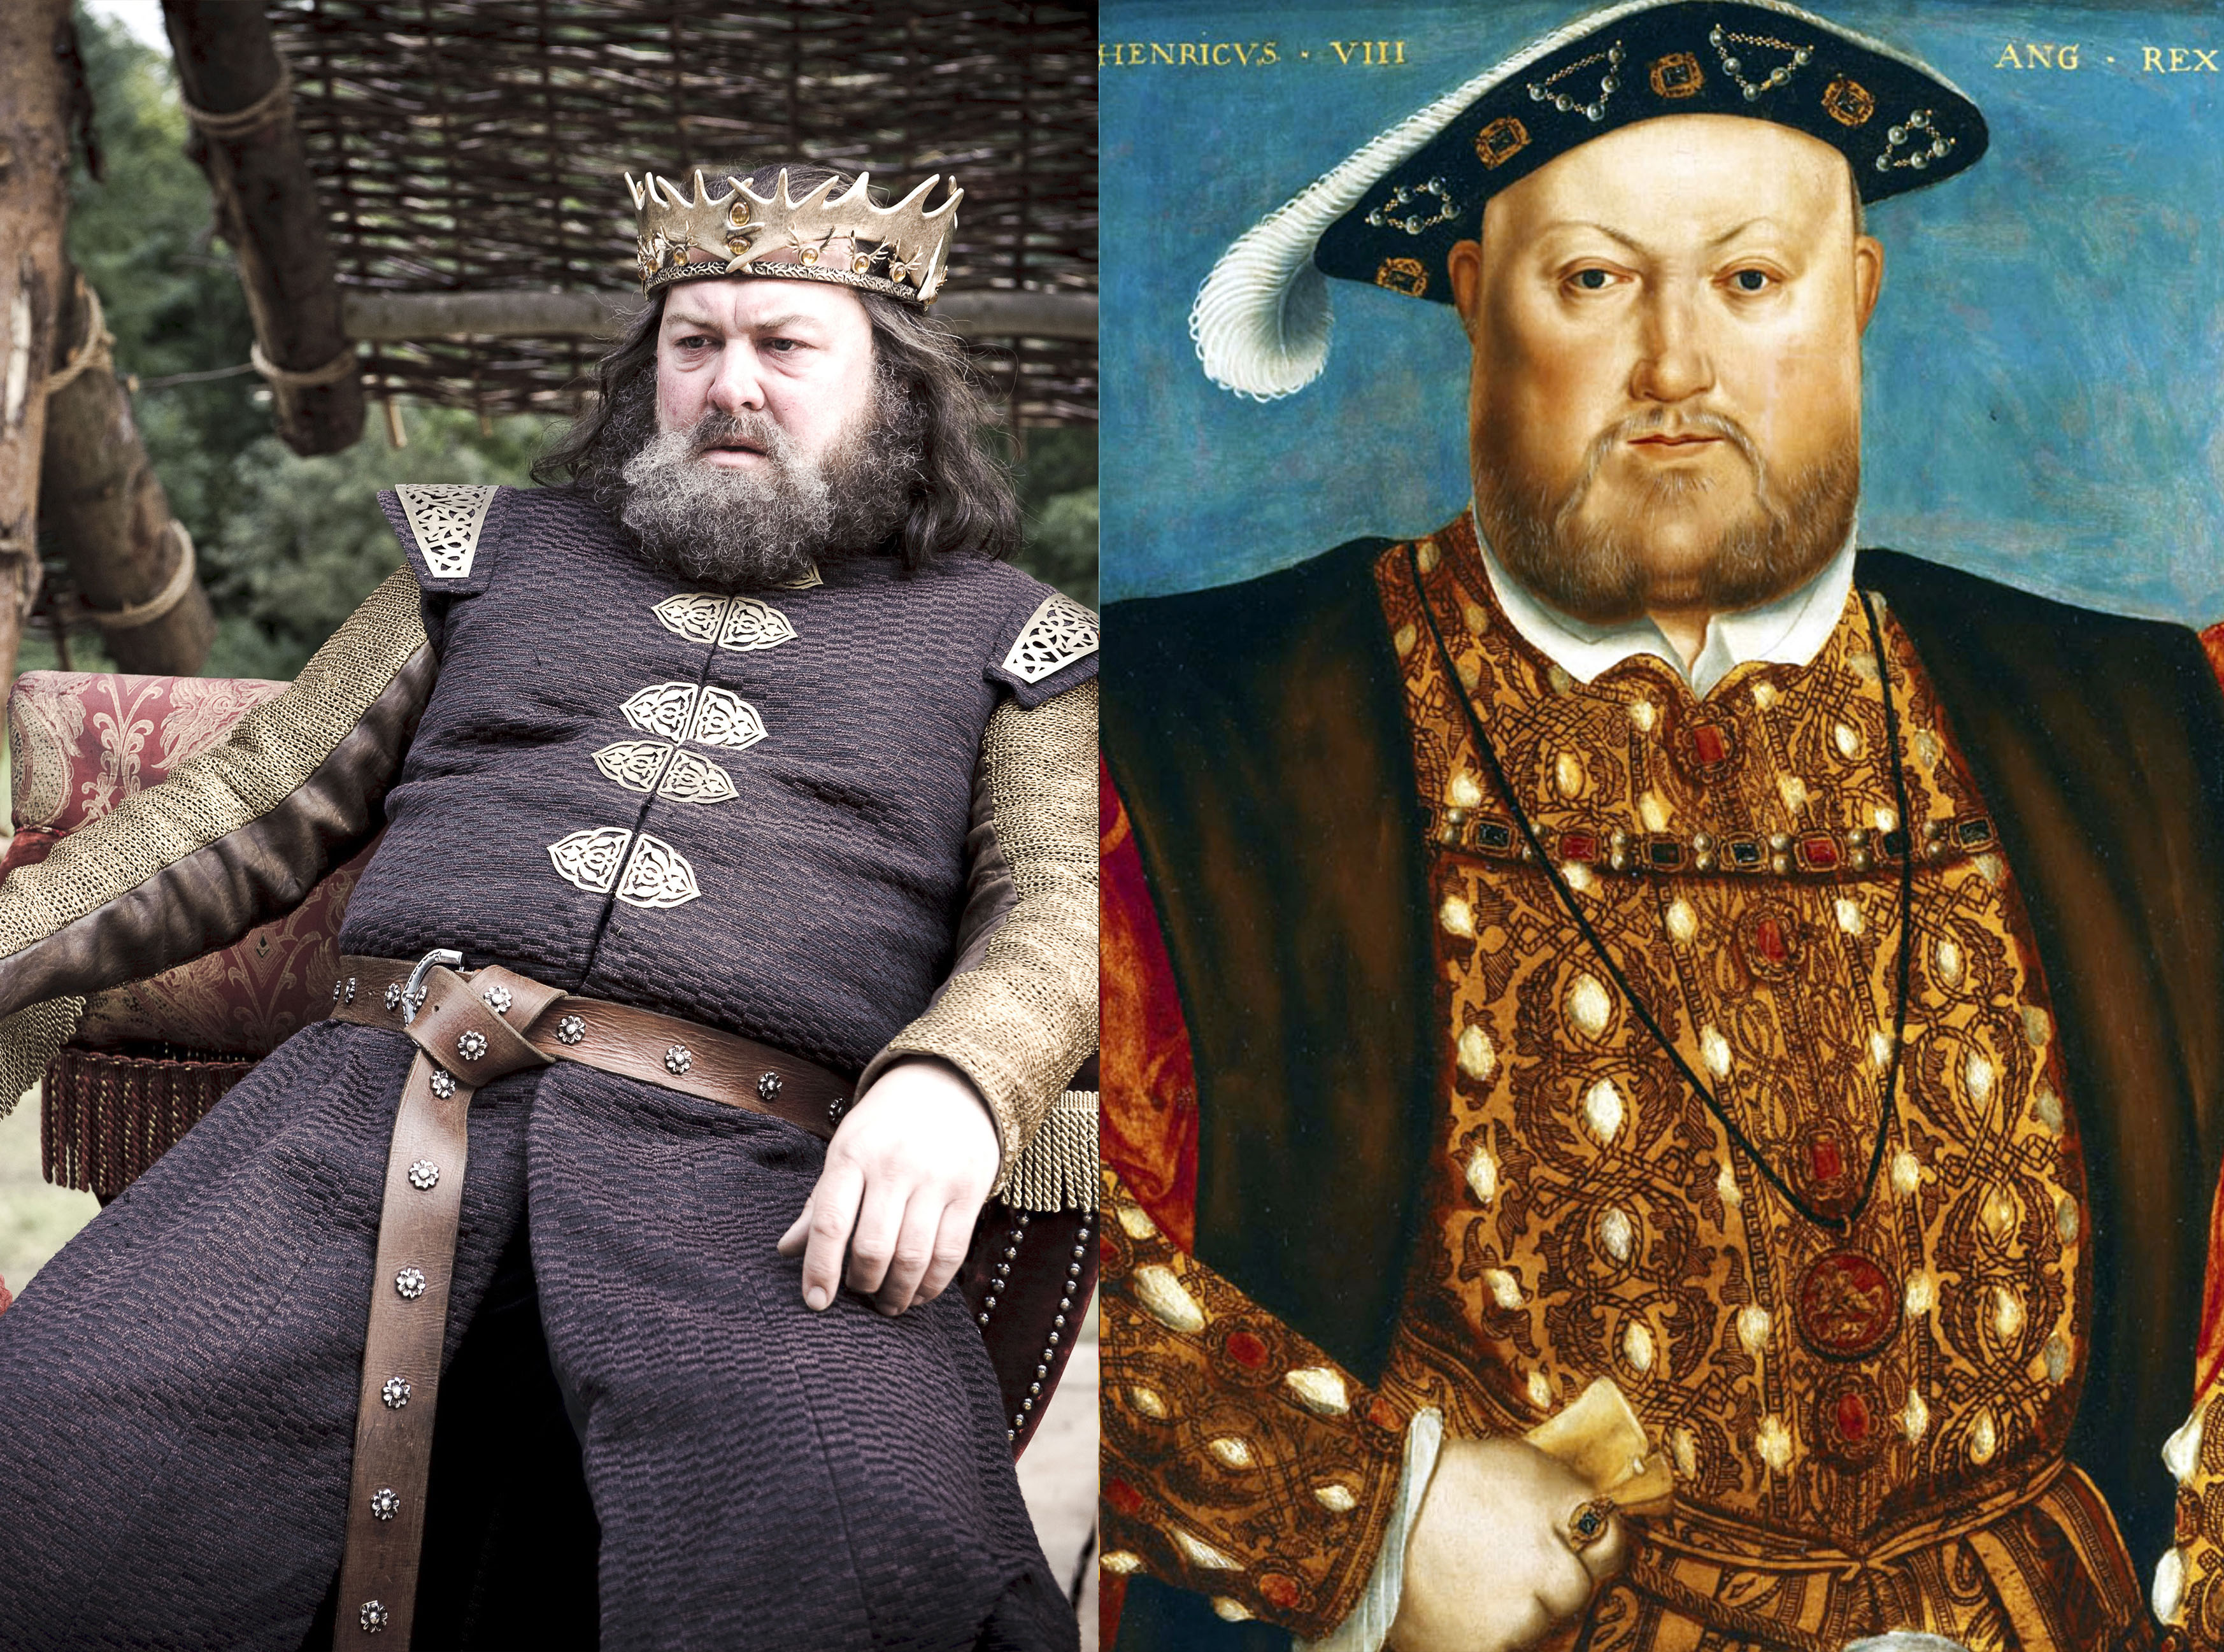 From left: Henry VIII and Robert Baratheon.